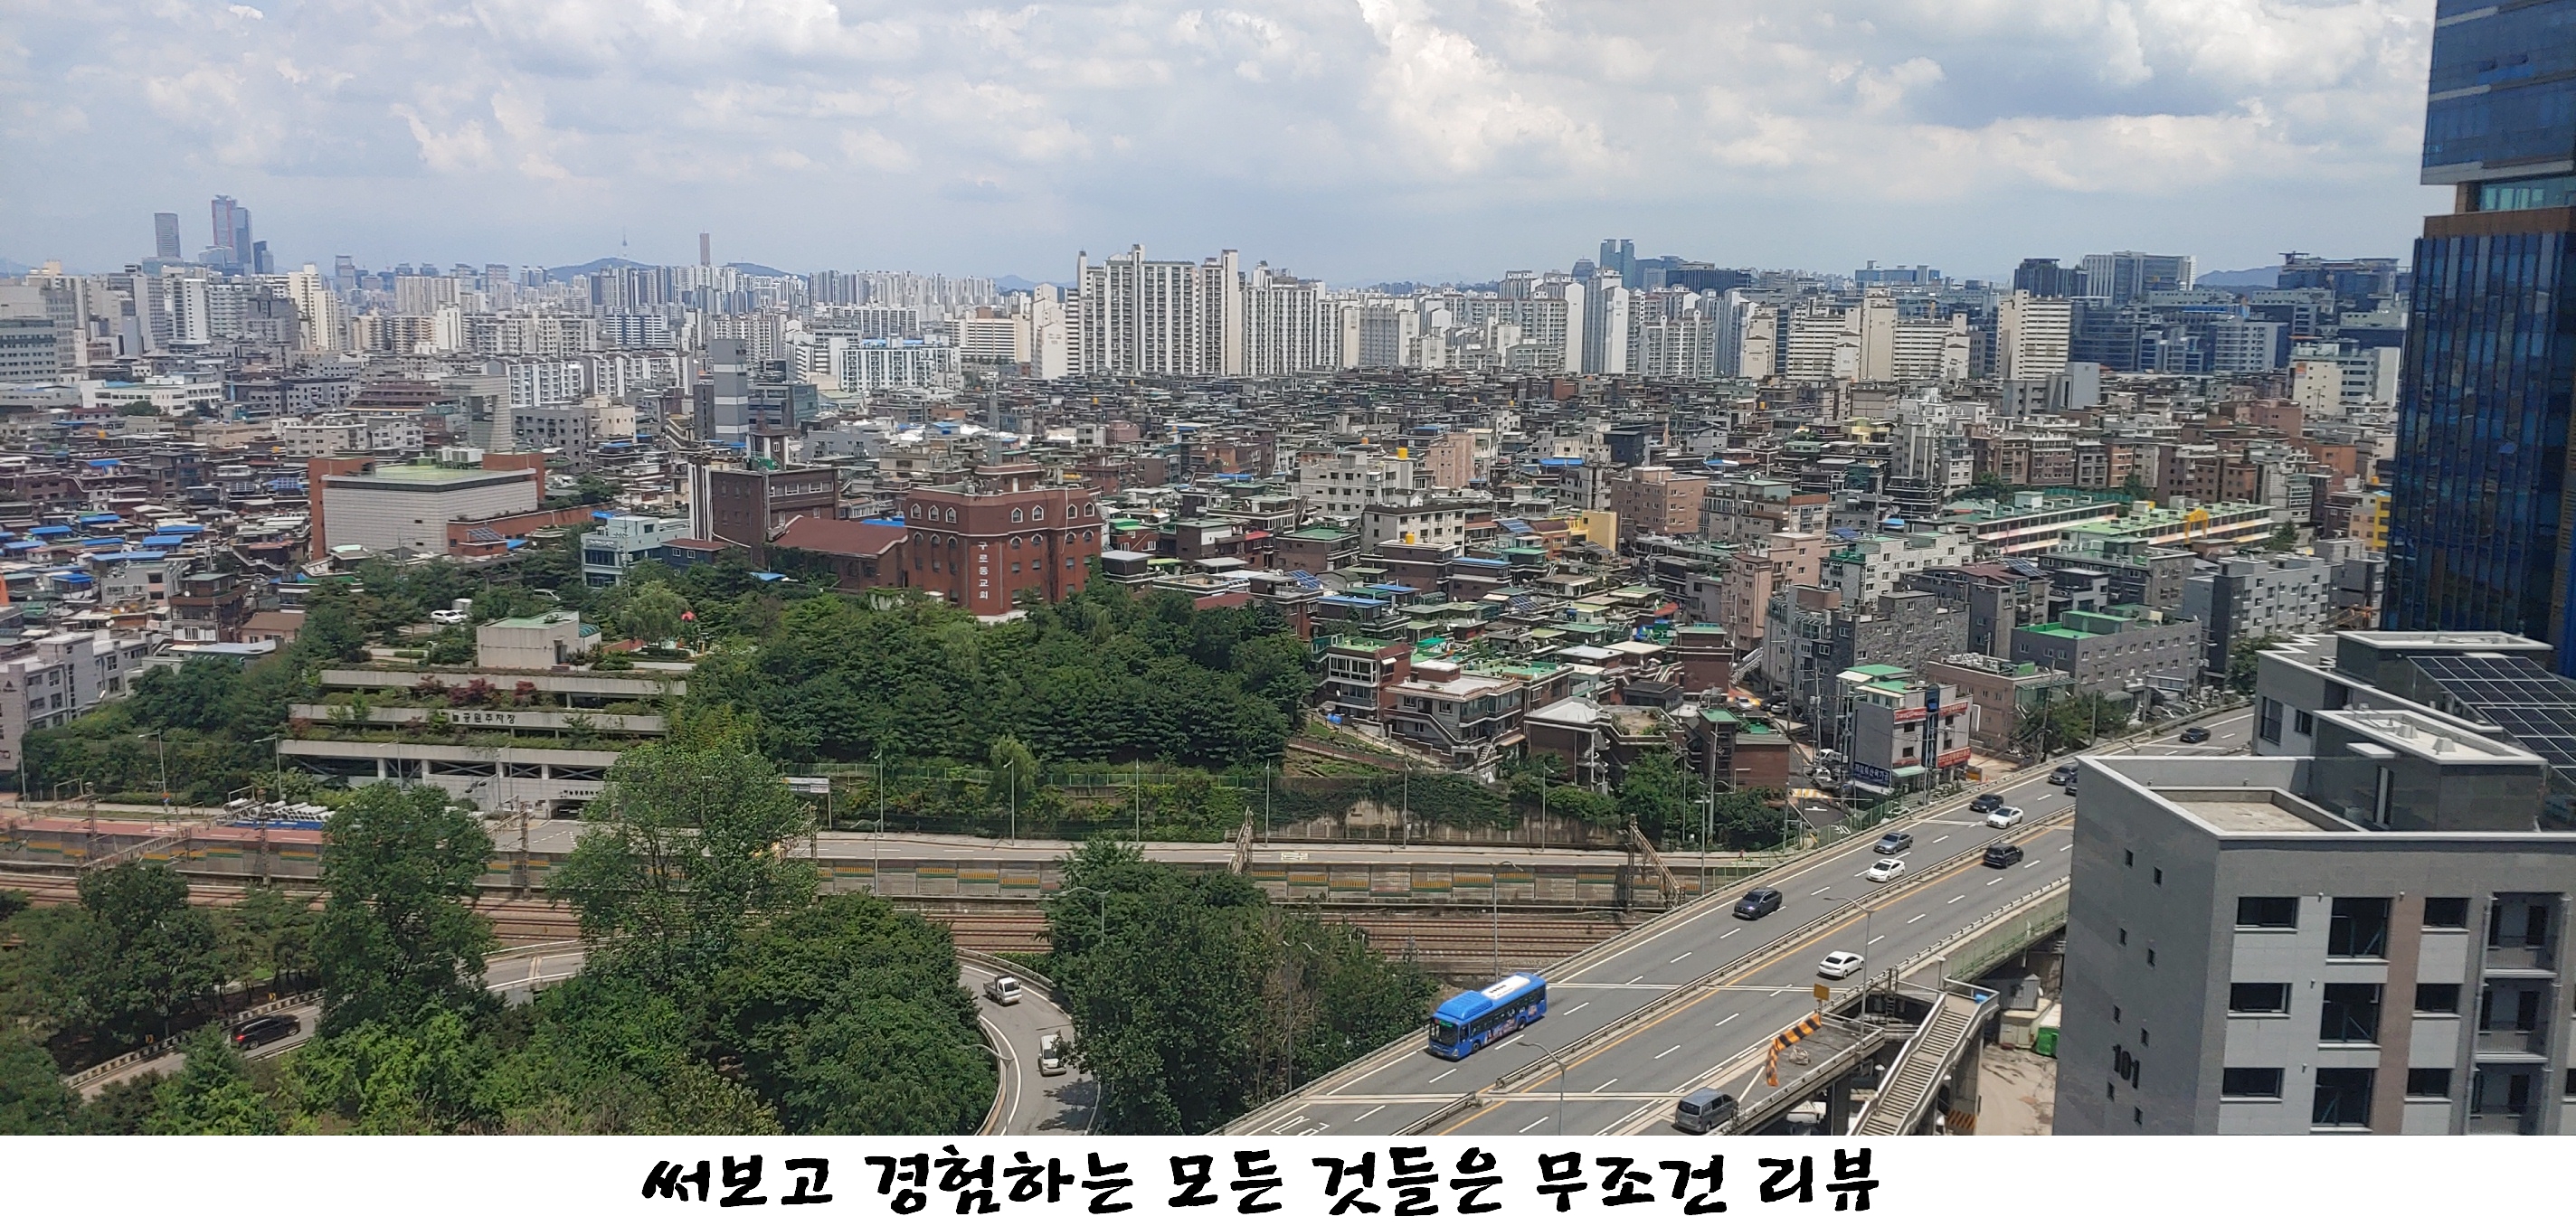 220701&#44; Seoul&#44; 사진&#44; 서울&#44; 풍경&#44; 하늘